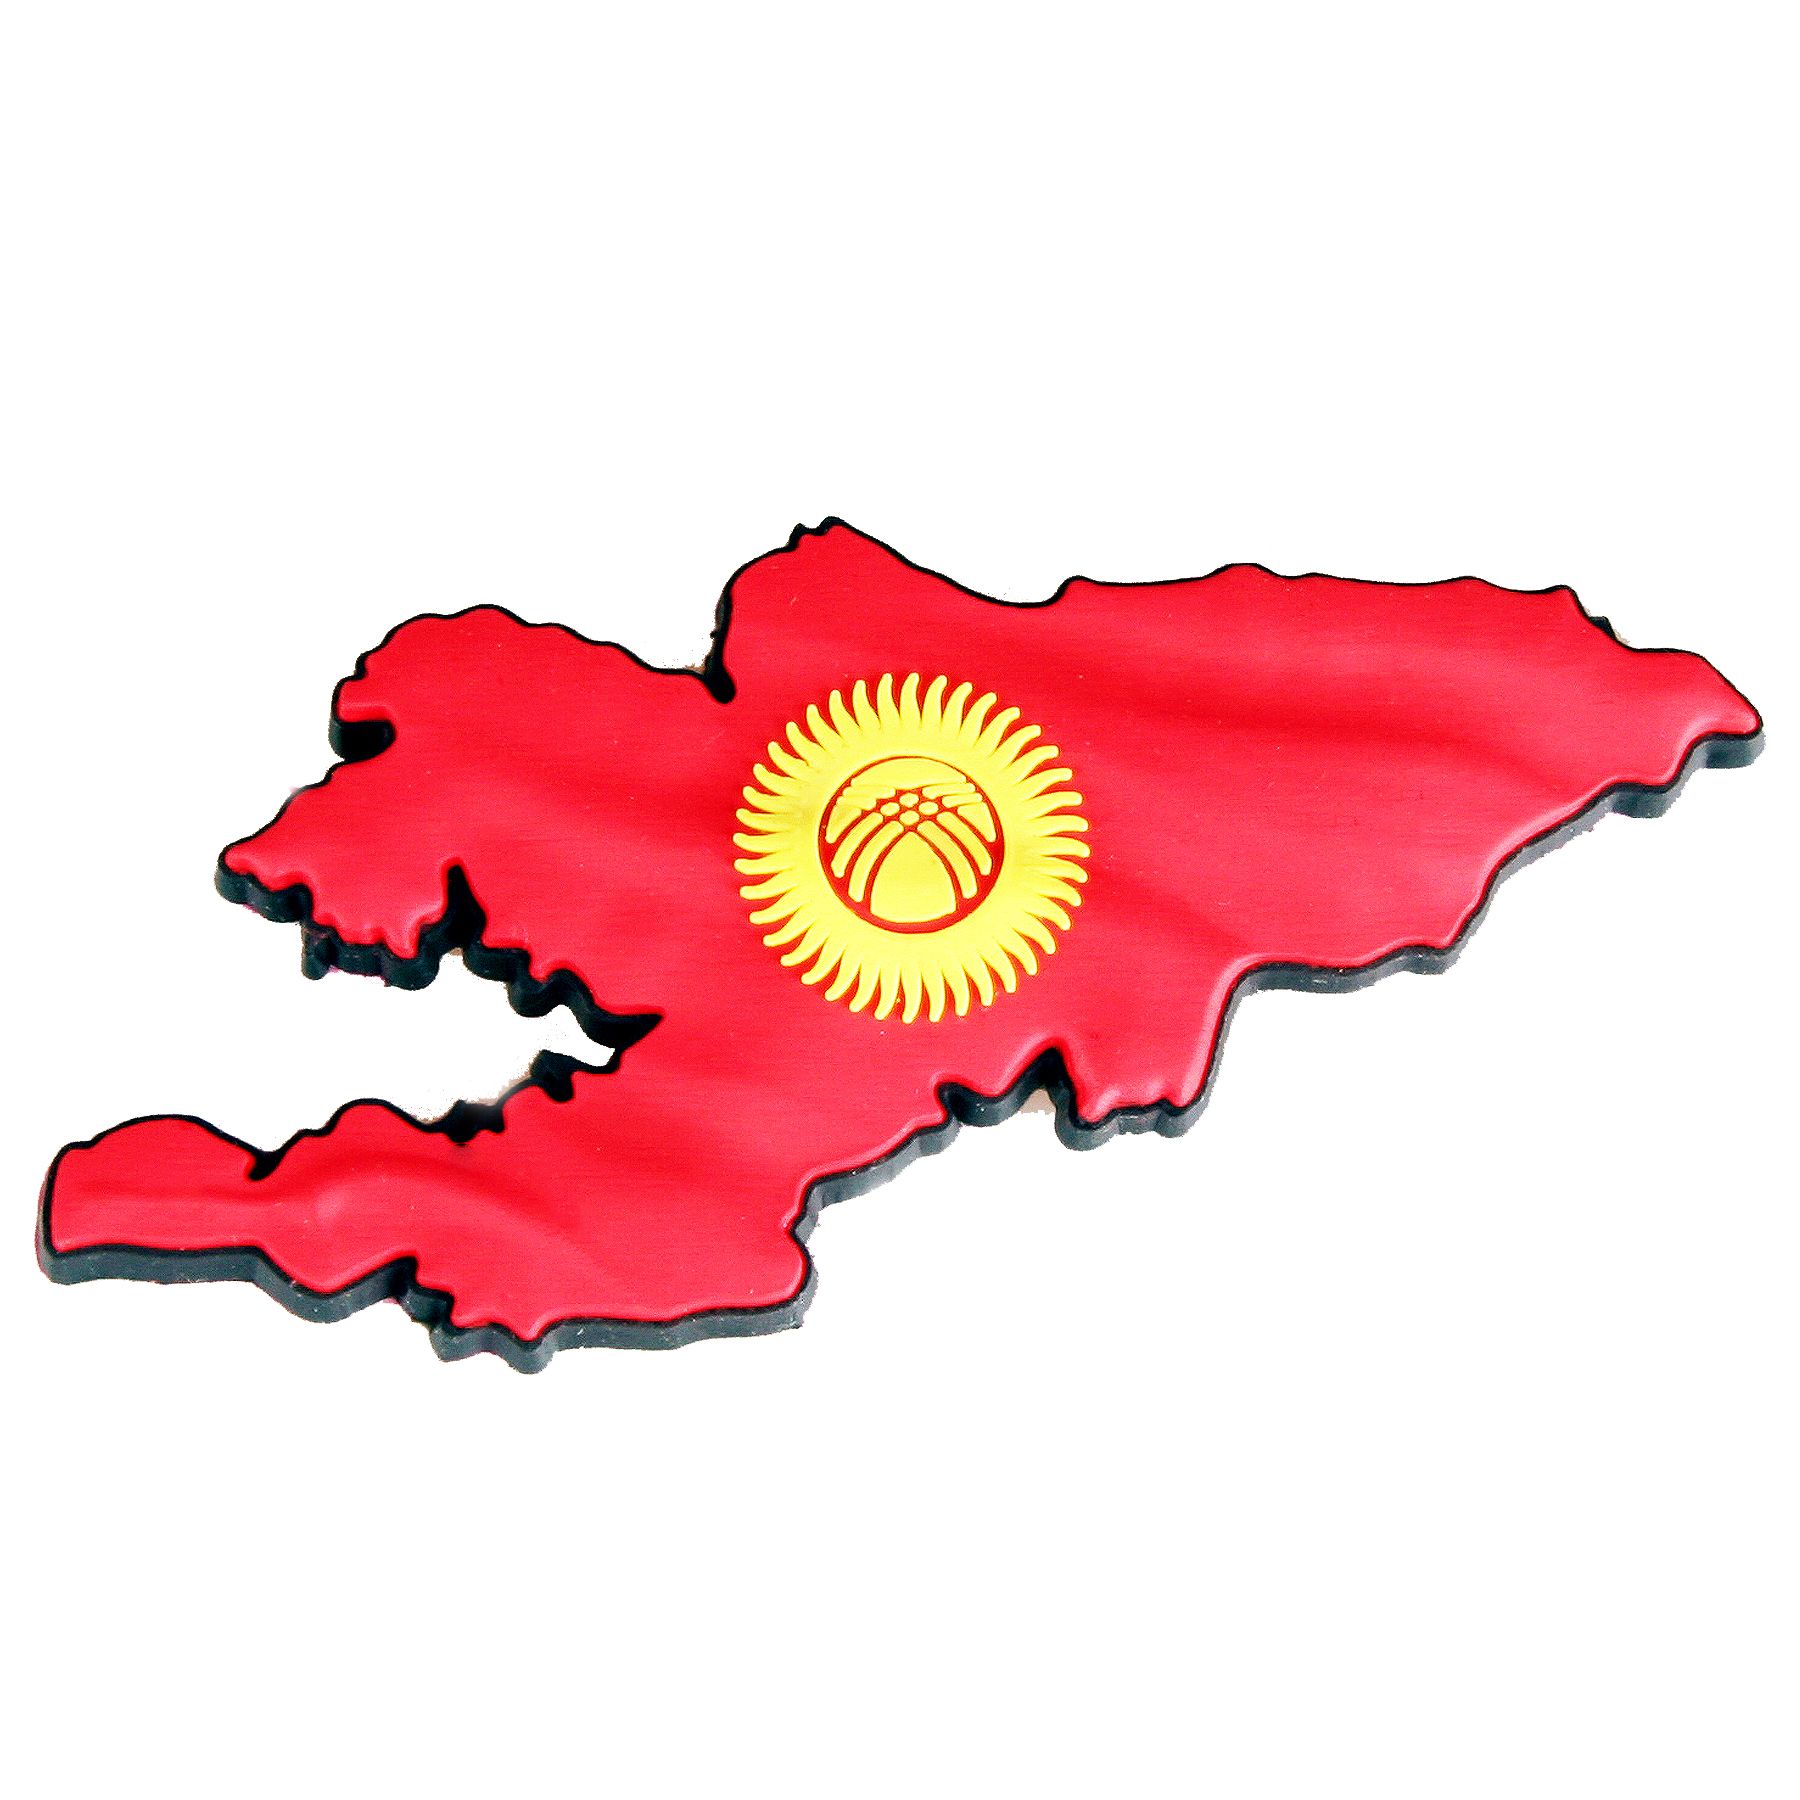 Магнит EPOS "Карта - Флаг Кыргызстана" пвх 11х7 см